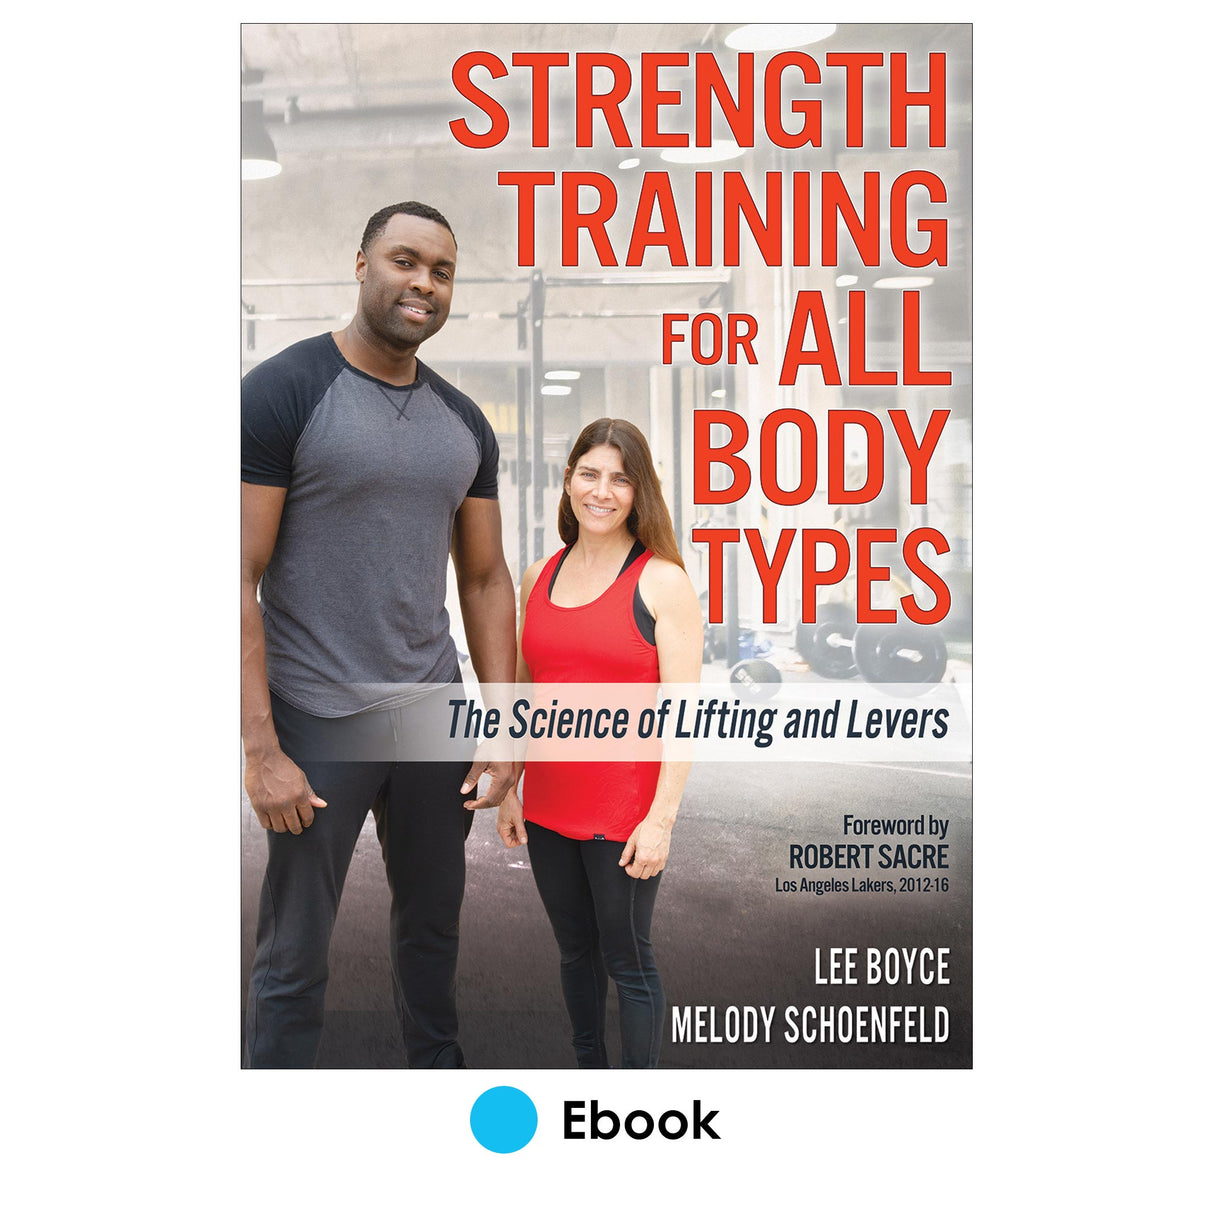 Strength Training for All Body Types epub